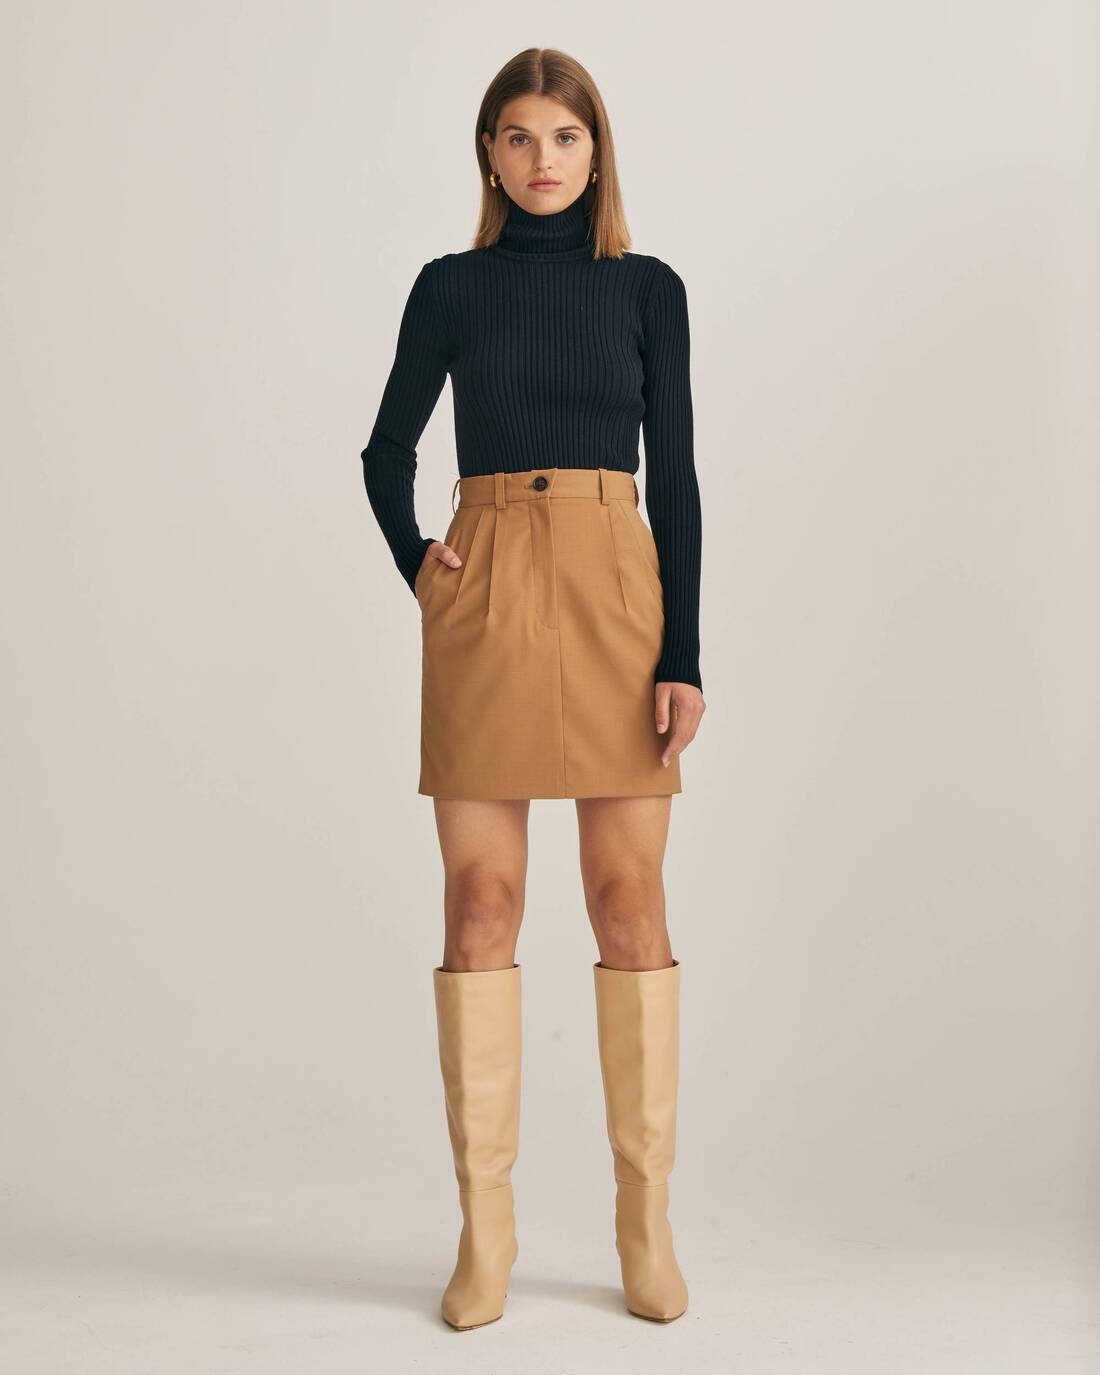 Ruched mini skirt